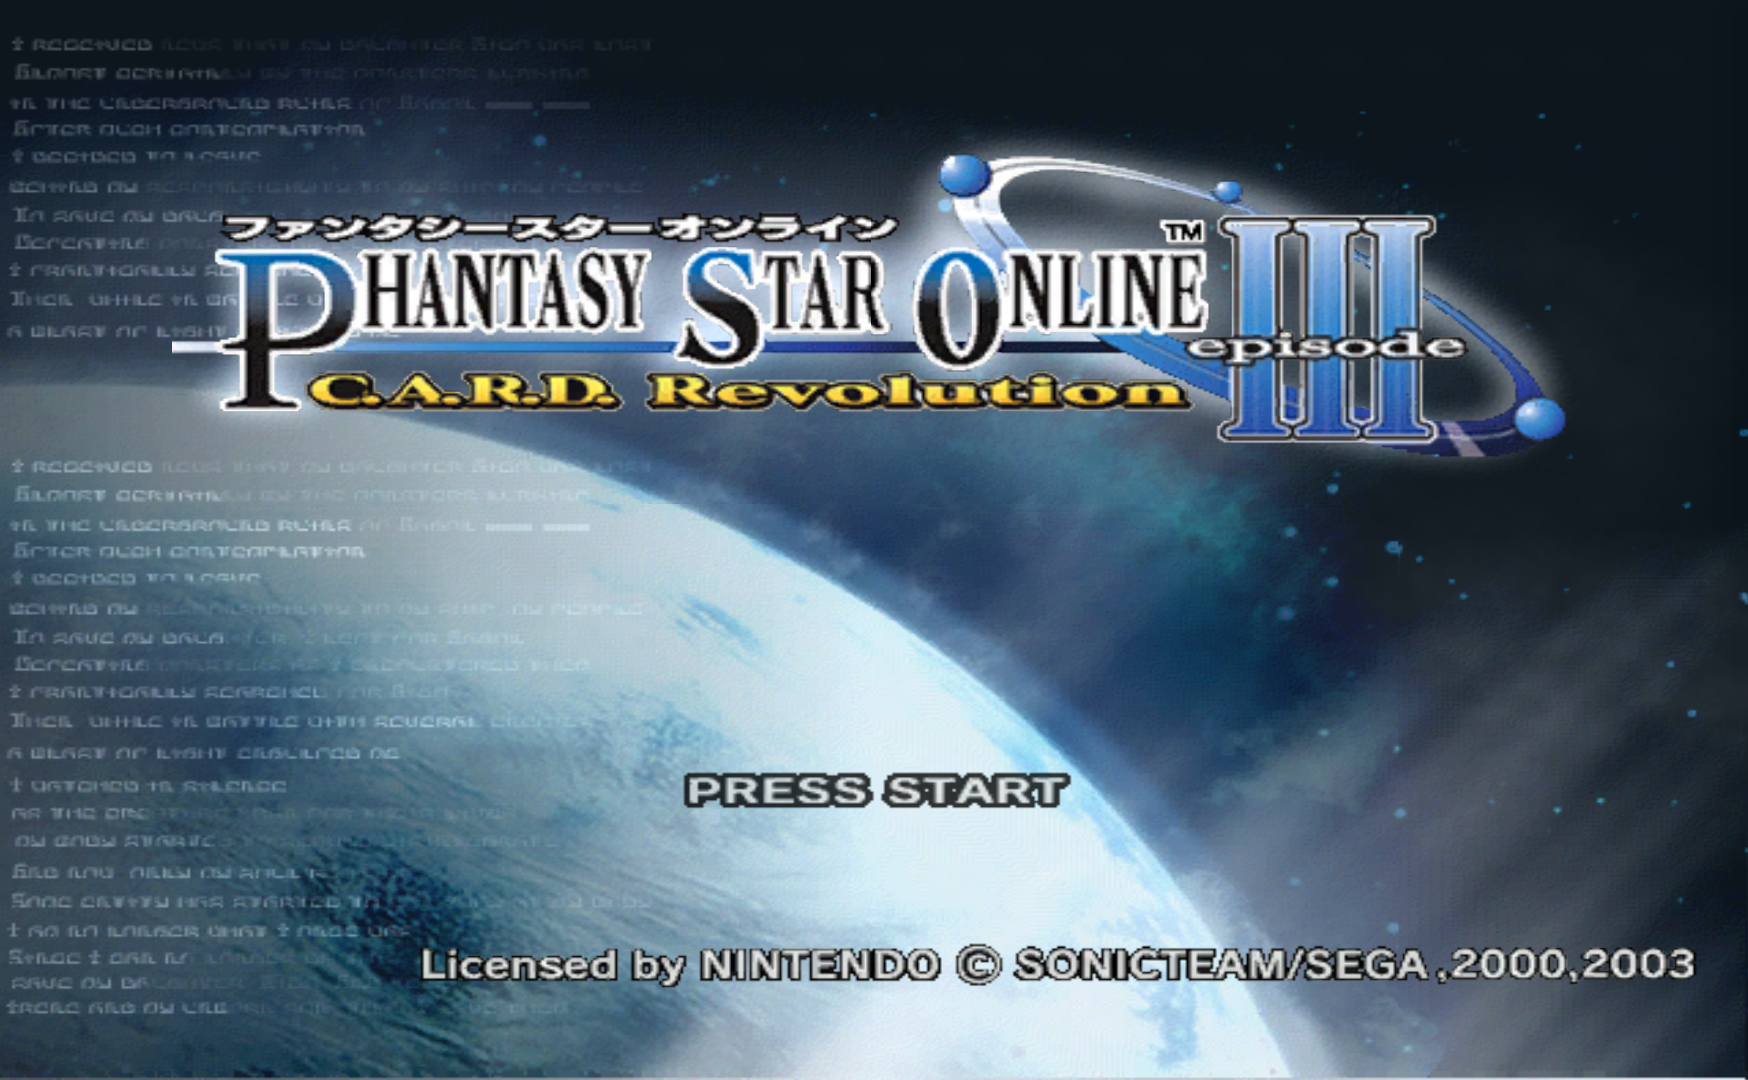 Phantasy Star Online Episode III: C.A.R.D. Revolution - Nintendo GameCube Game